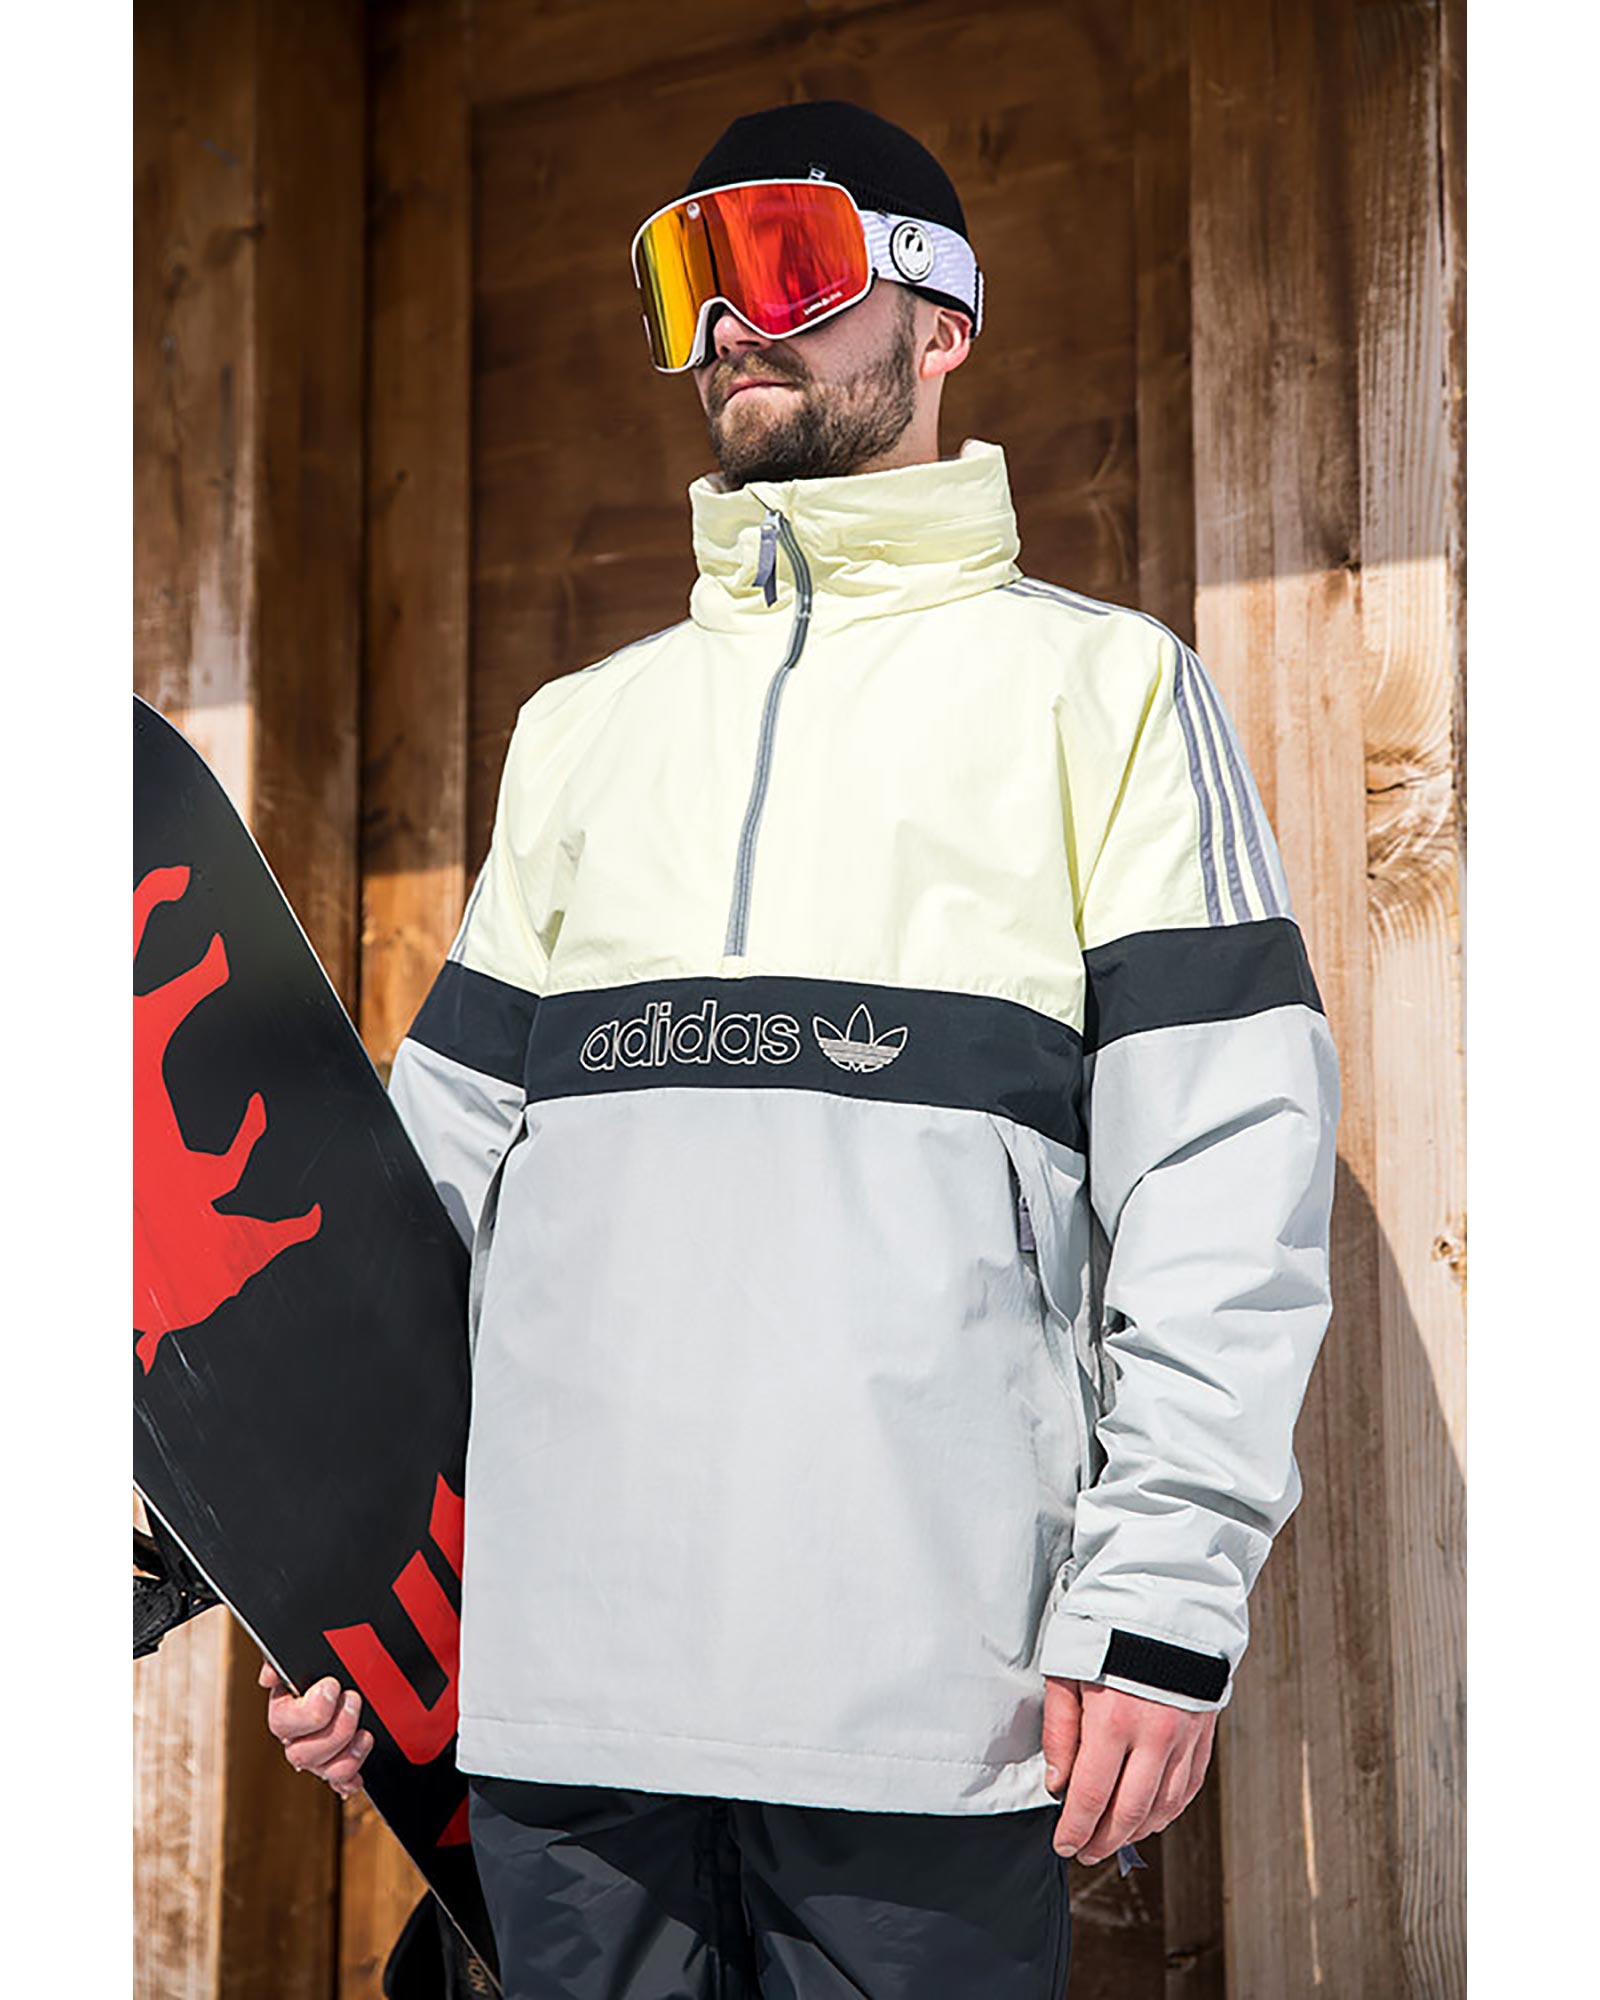 Adidas Men's Snowboard Jacket 2019 / 2020